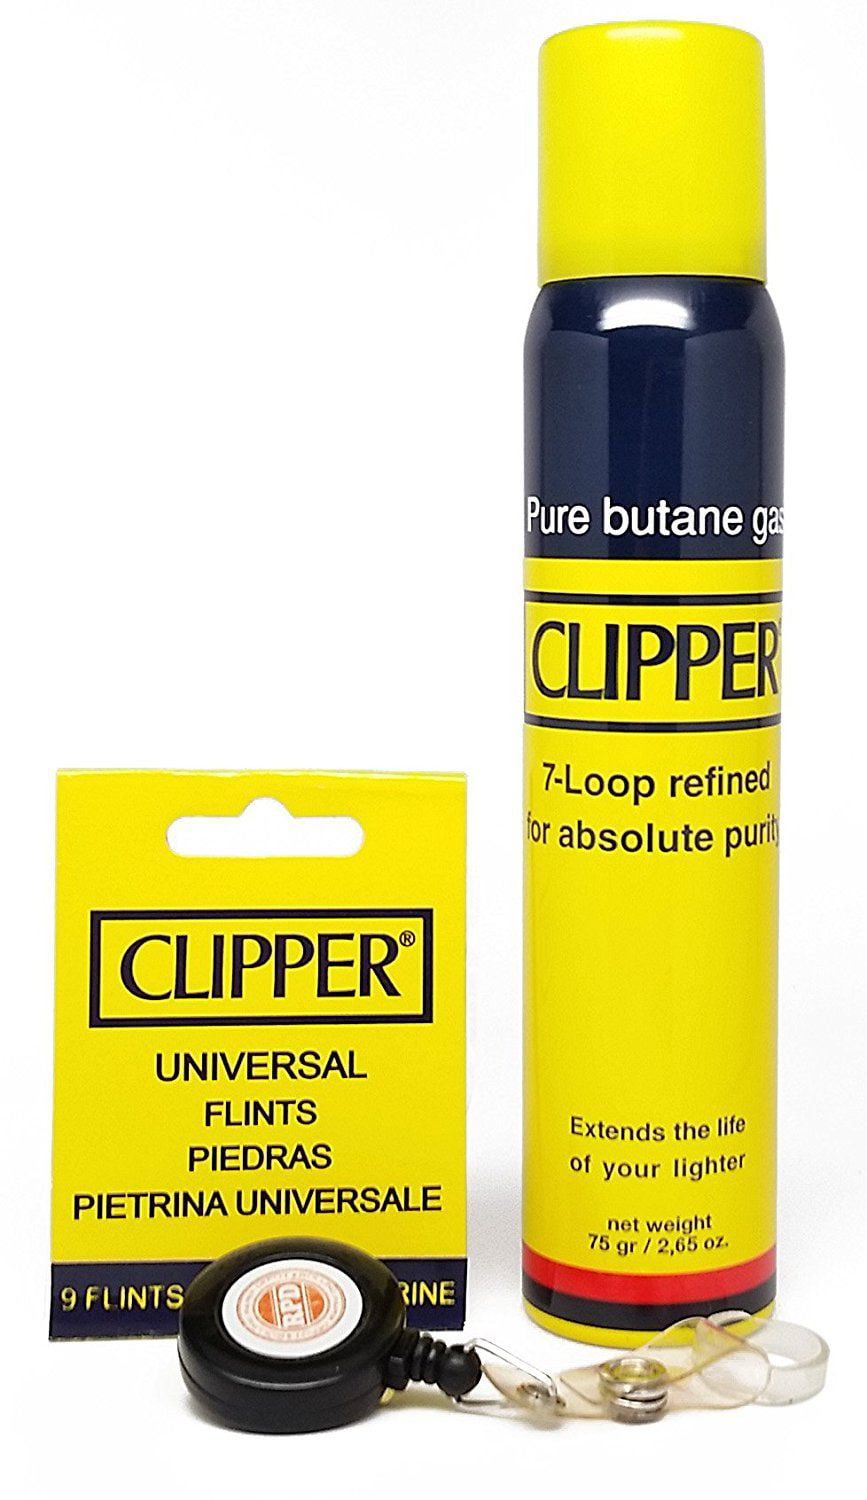 Bundle - 3 Items - Clipper Butane, Clipper Flints and RPD Lighter Lasso . 